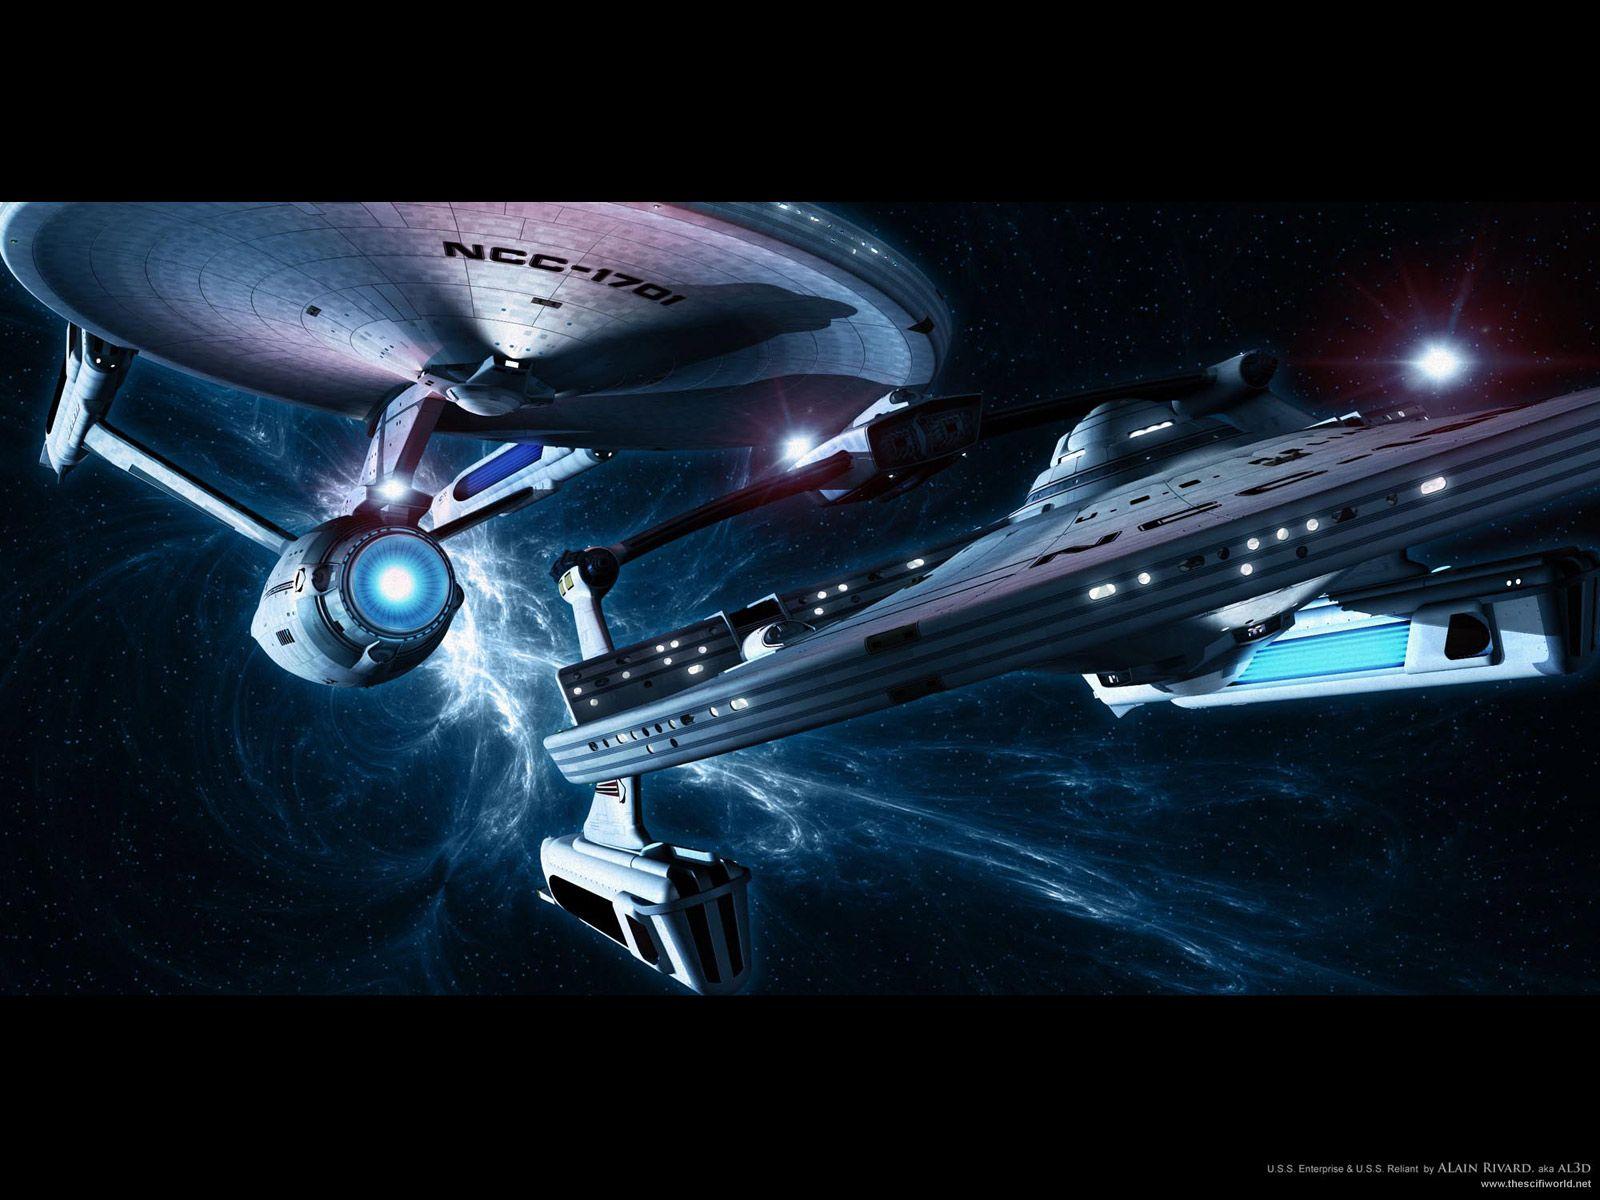 Star Trek Starships USS Enterprise and USS Reliant on sector